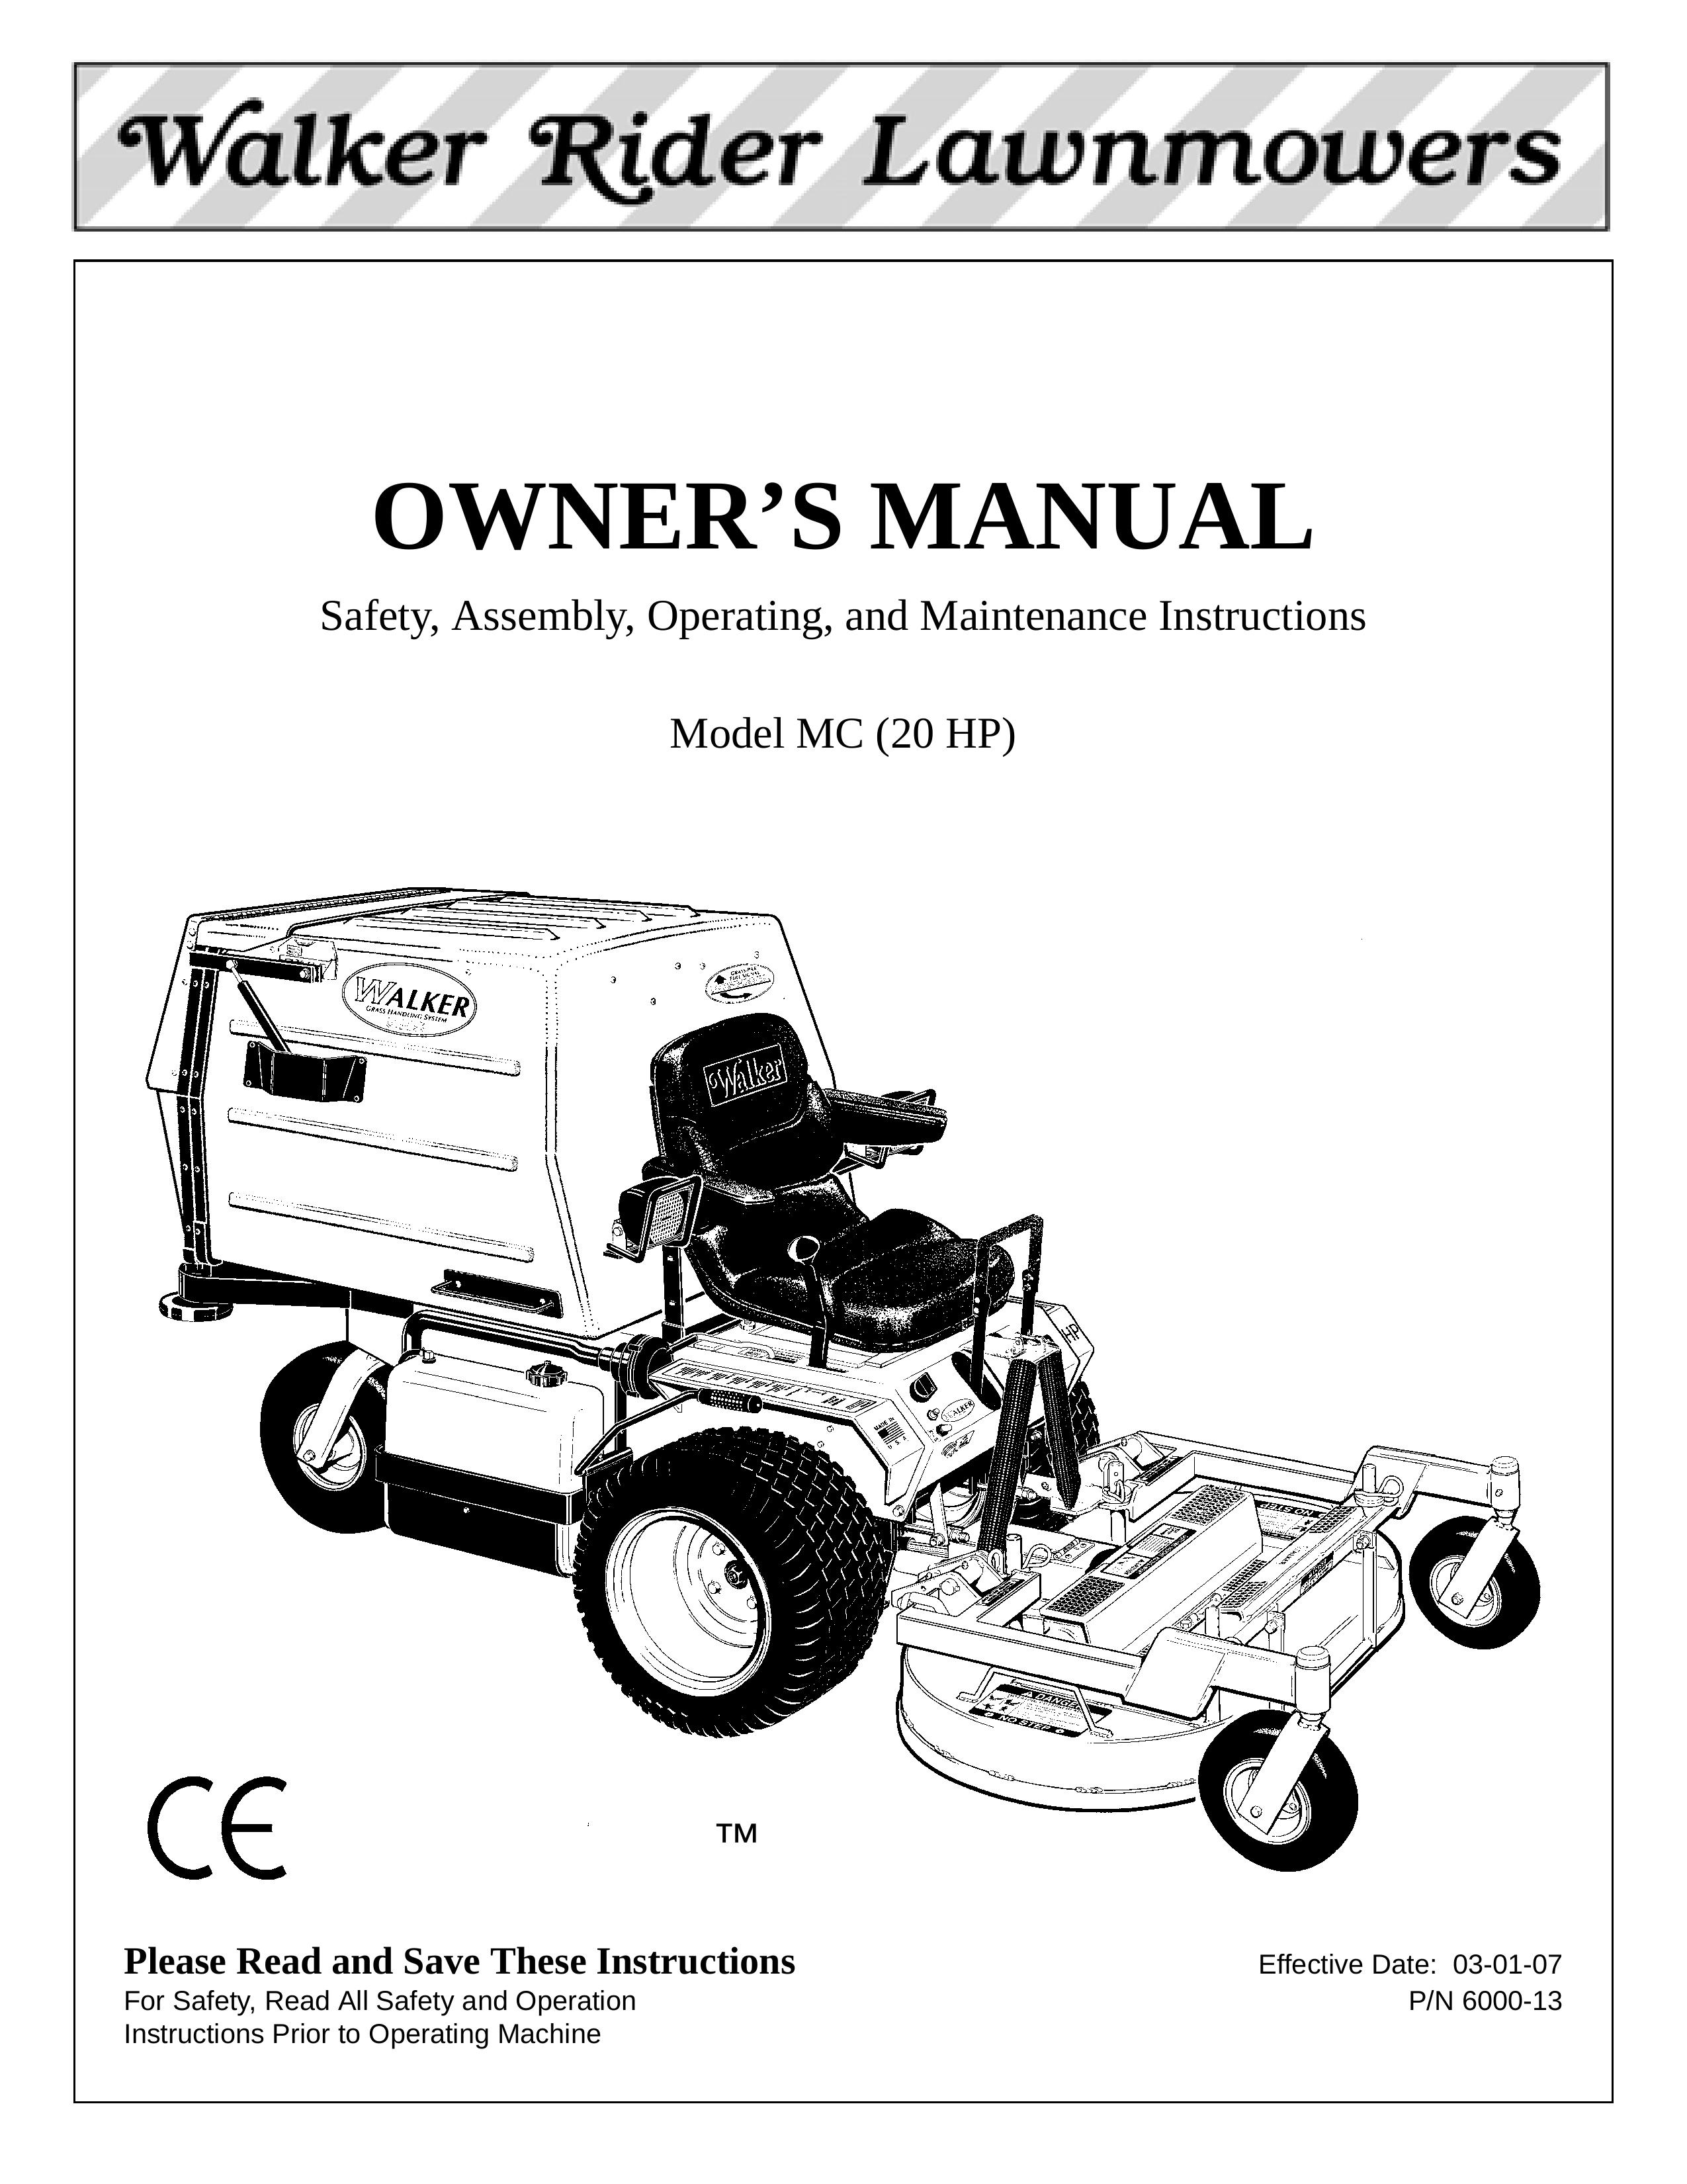 Walker MC (20 HP) Lawn Mower User Manual